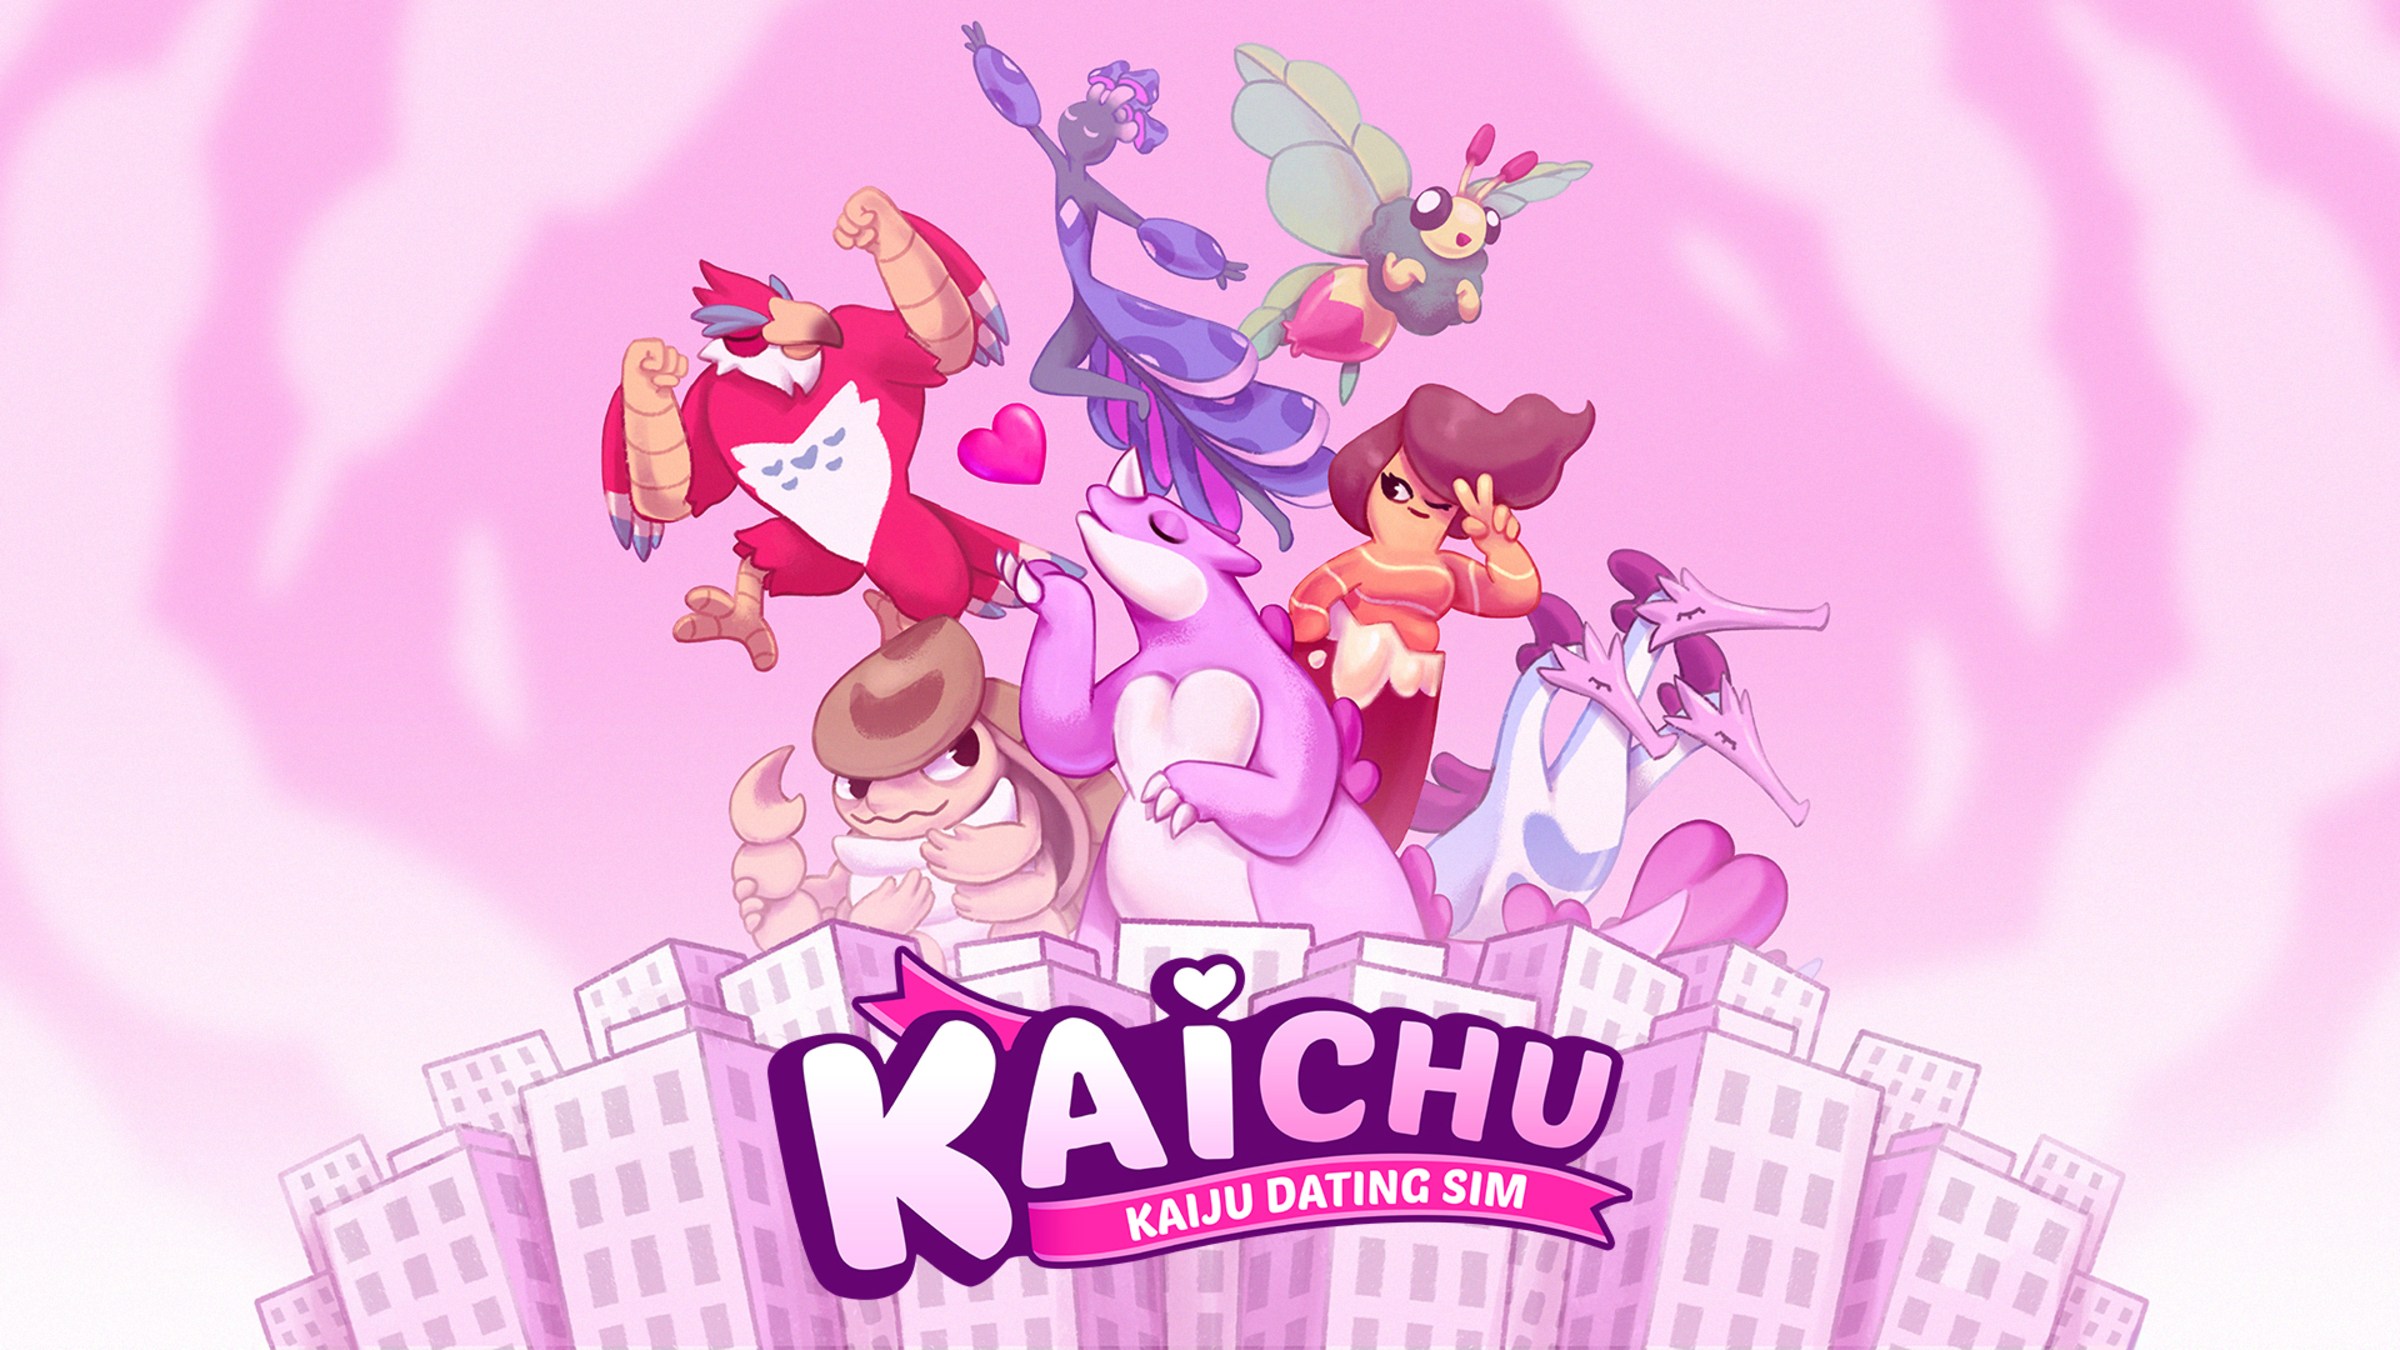 Kaichu: The Kaiju Sim for Switch Nintendo Official Site